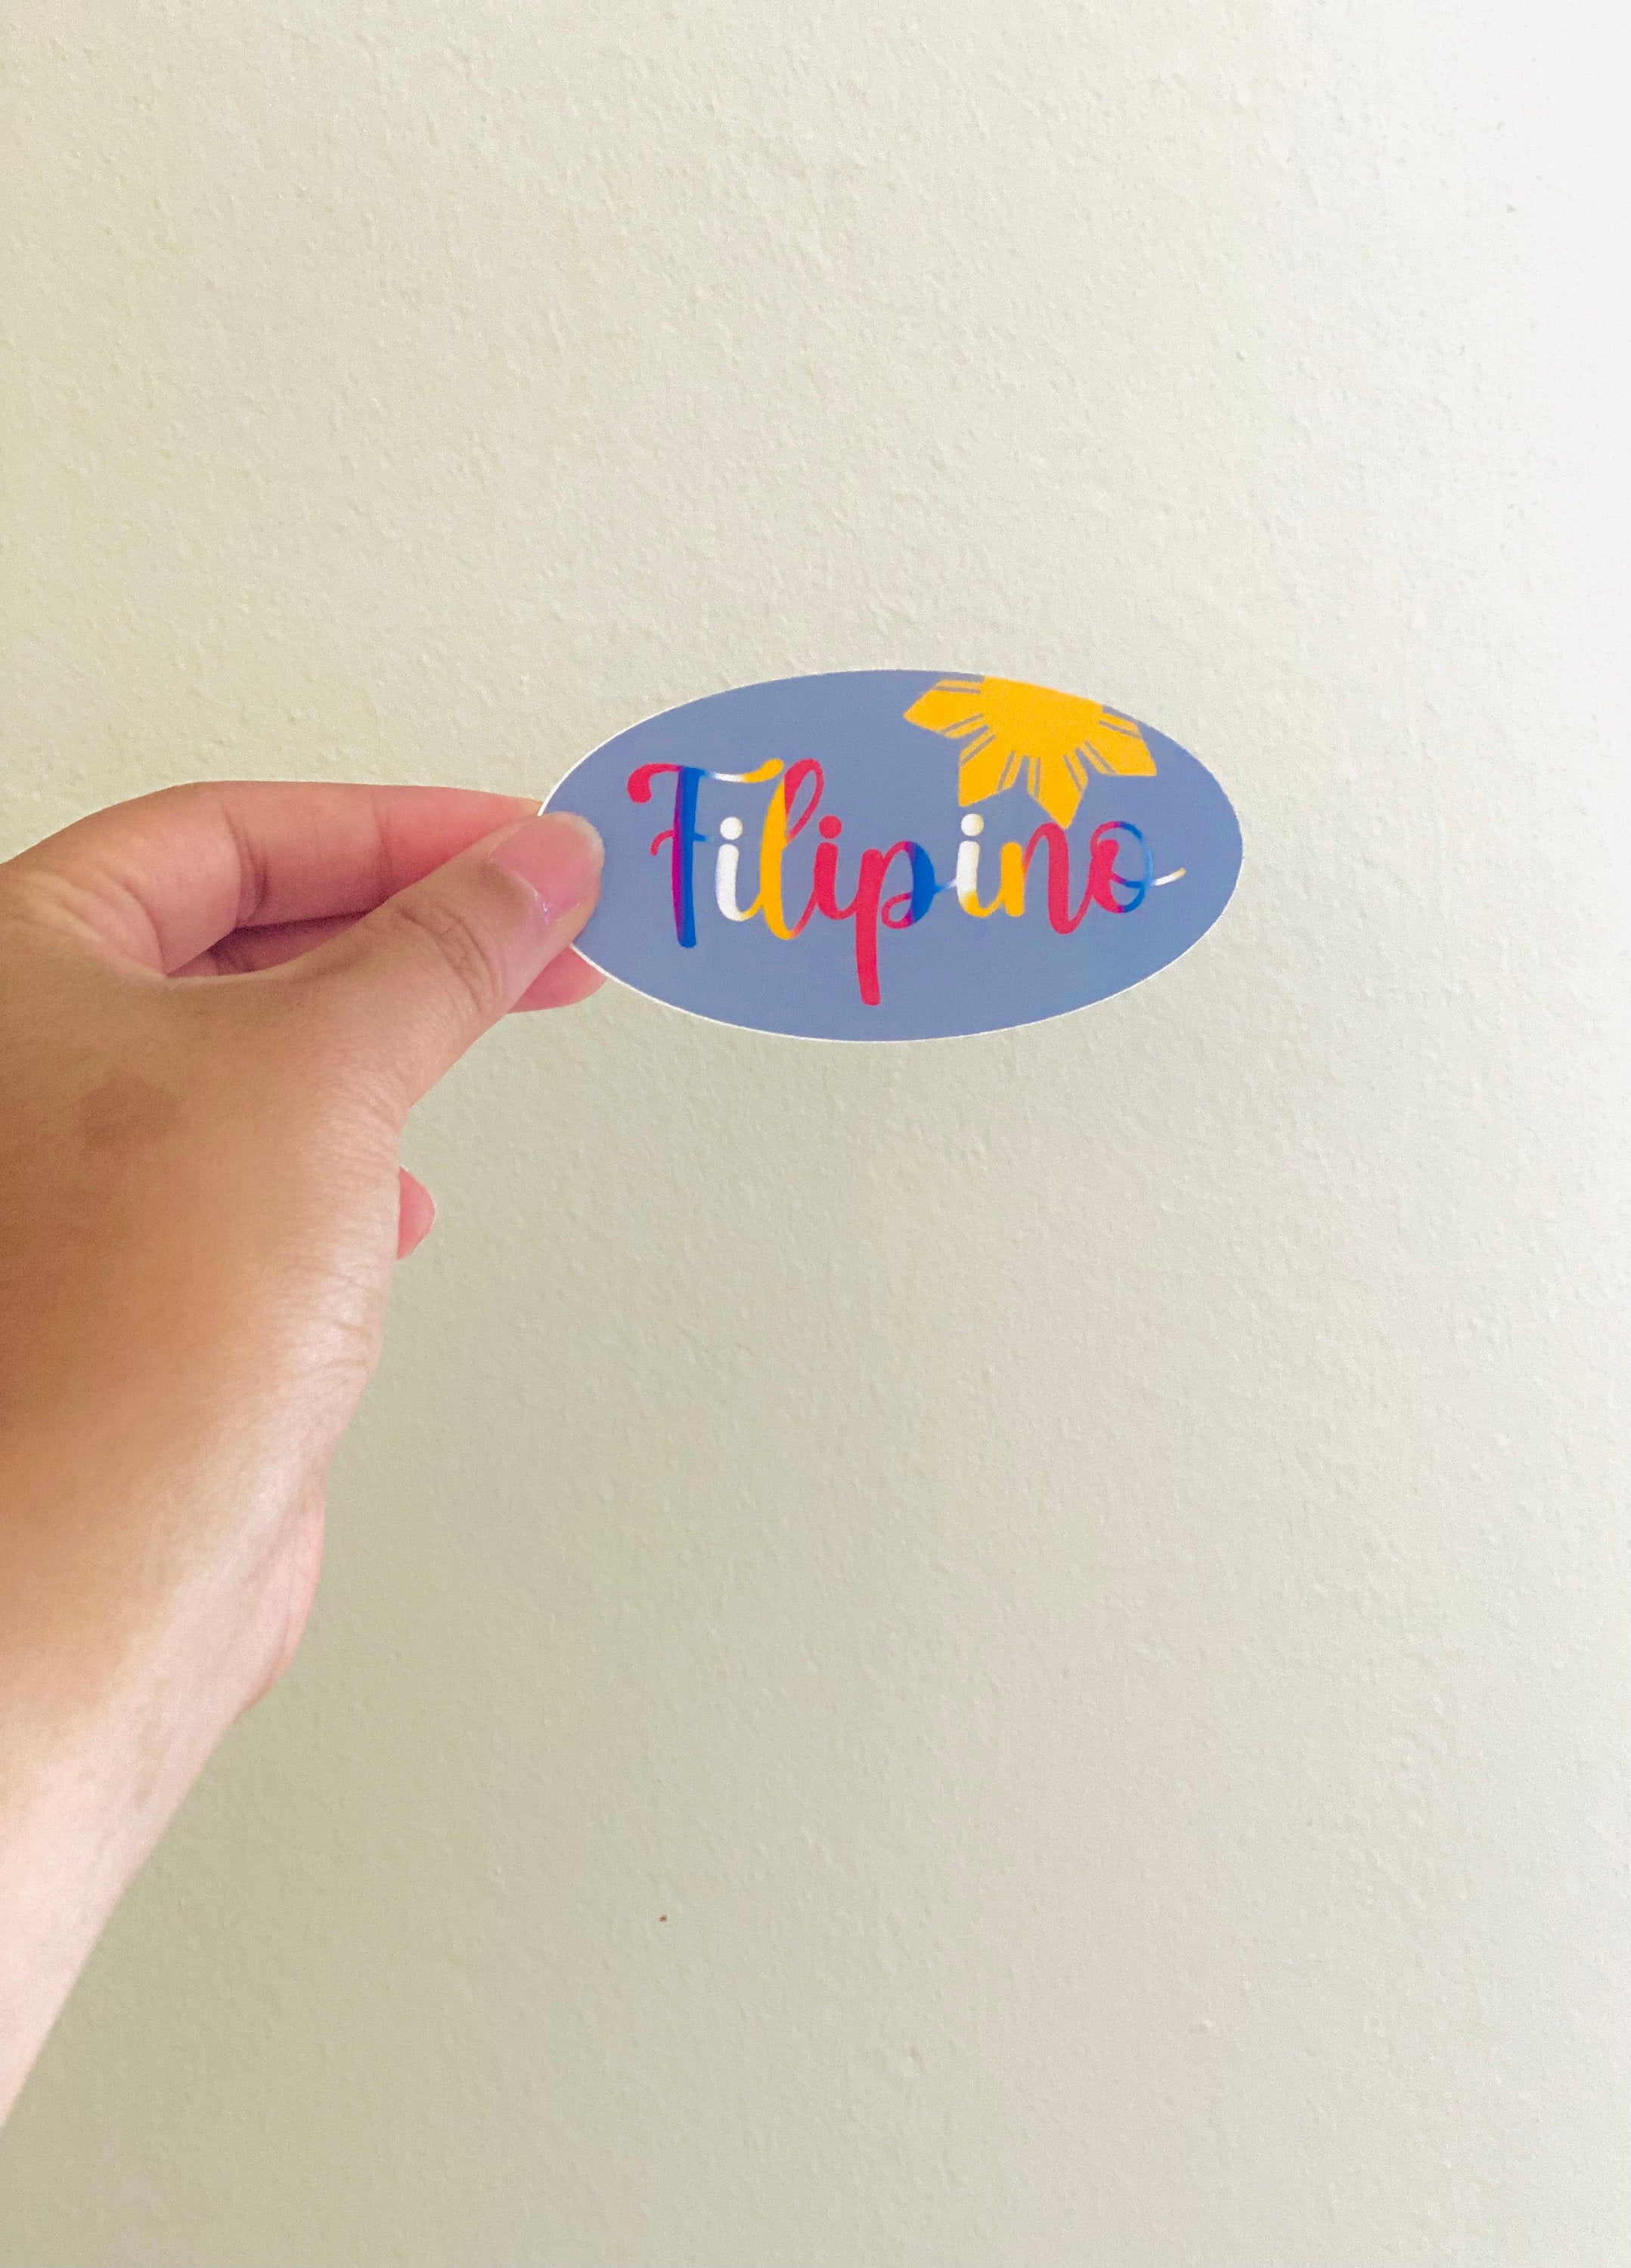 Mie Makes Filipino Sticker, Filipino, Filipino Sun, Pinoy, Philippines, Water bottle Sticker, Laptop Sticker, Planner Sticker, Filipino Decal, Pinay